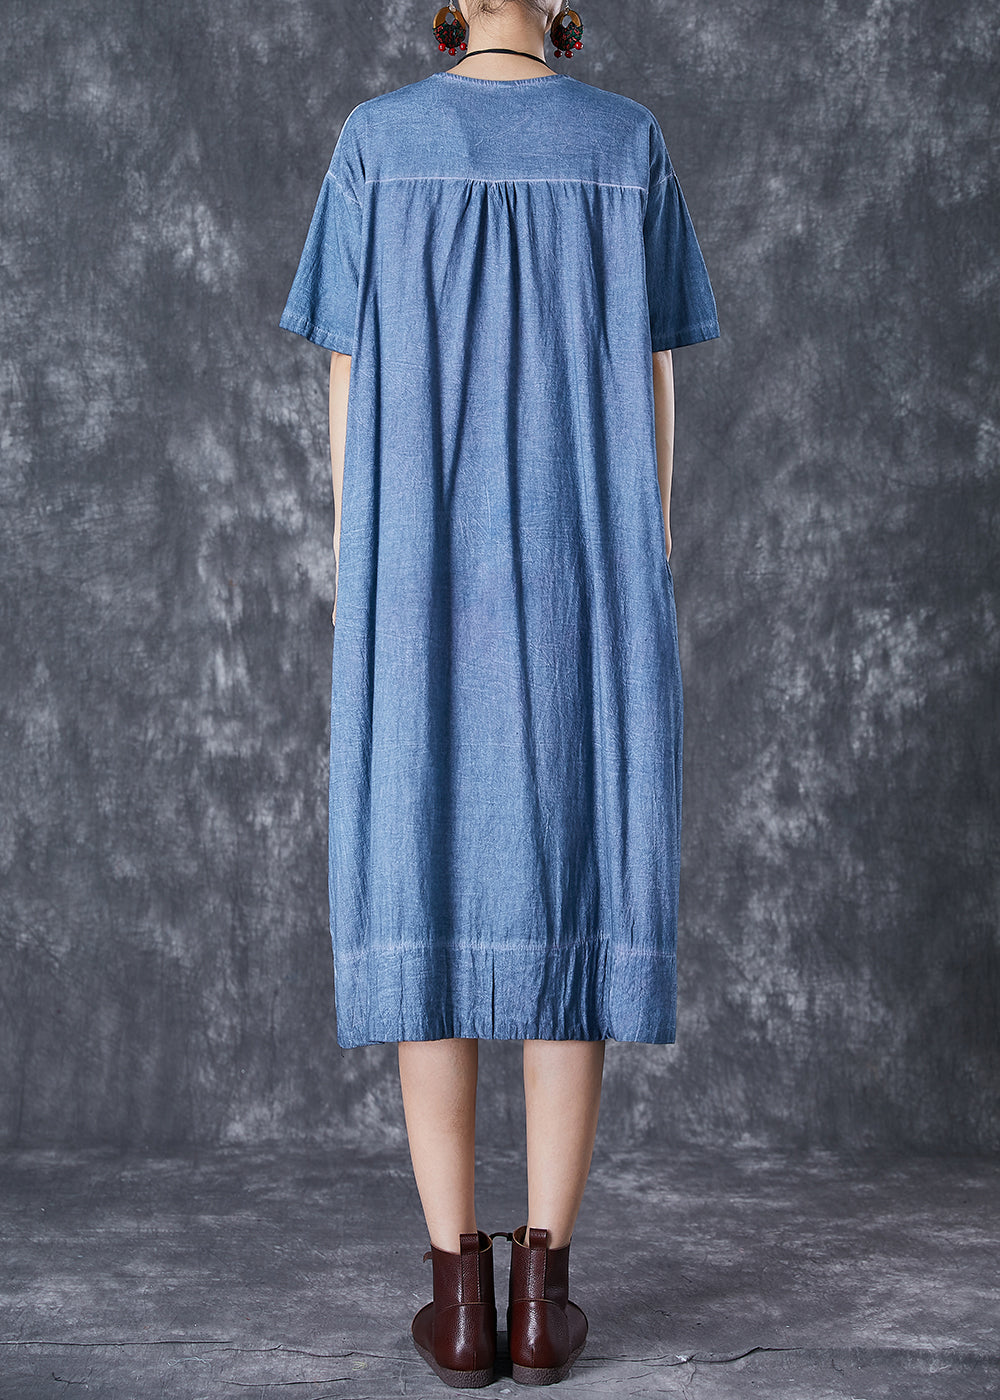 Denim Blue Cotton Robe Dresses Oversized Pockets